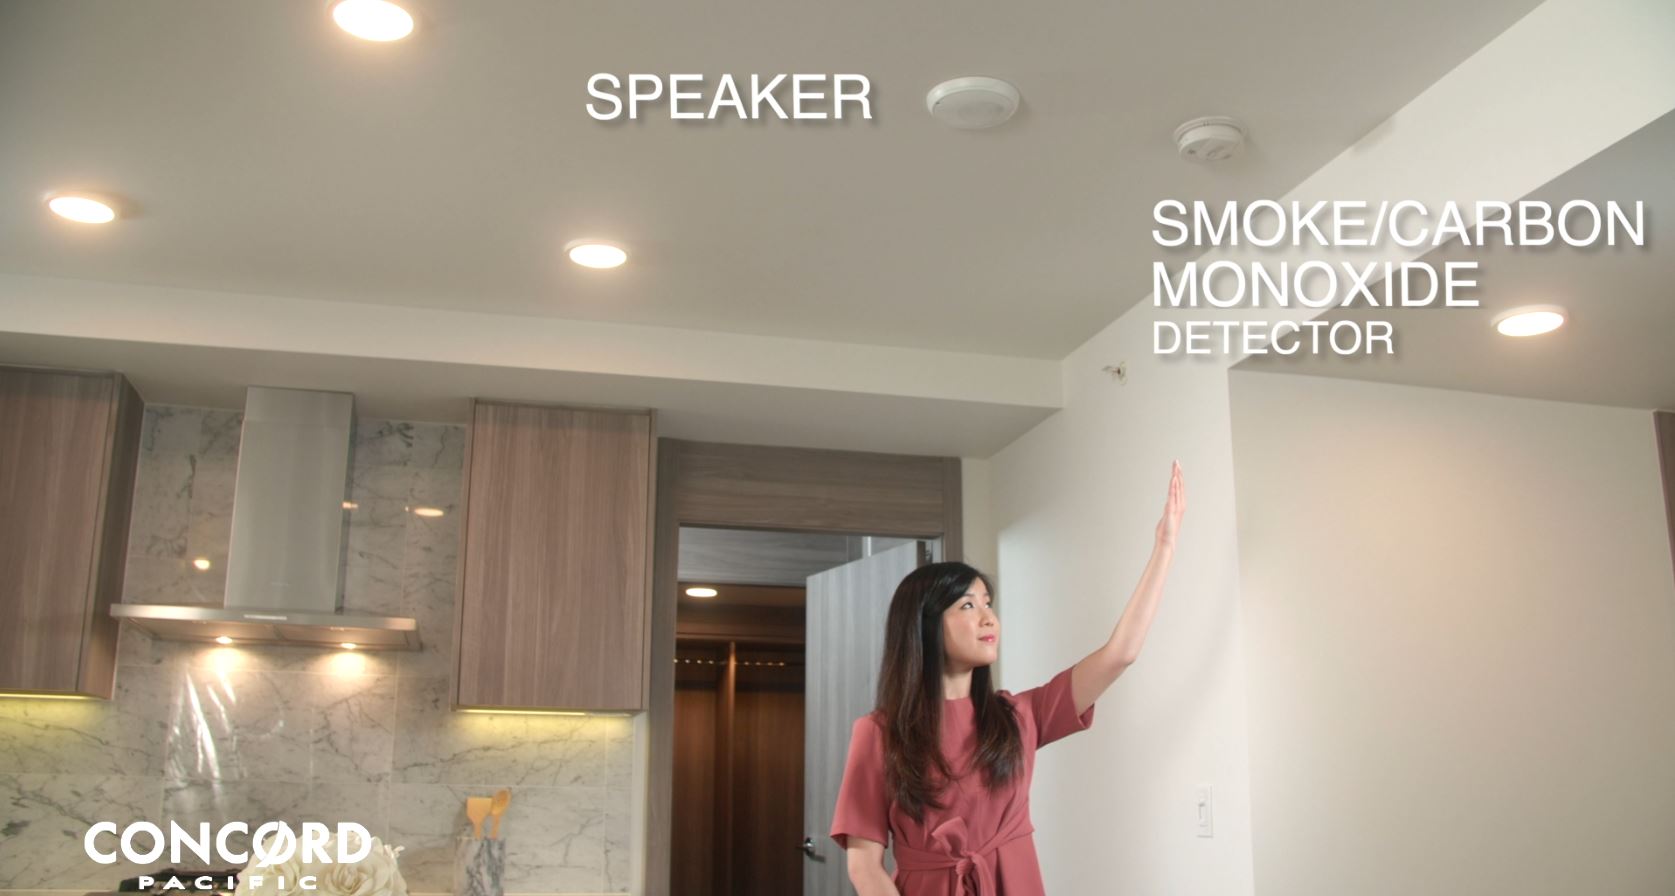 Smoke Detector & Speaker Location